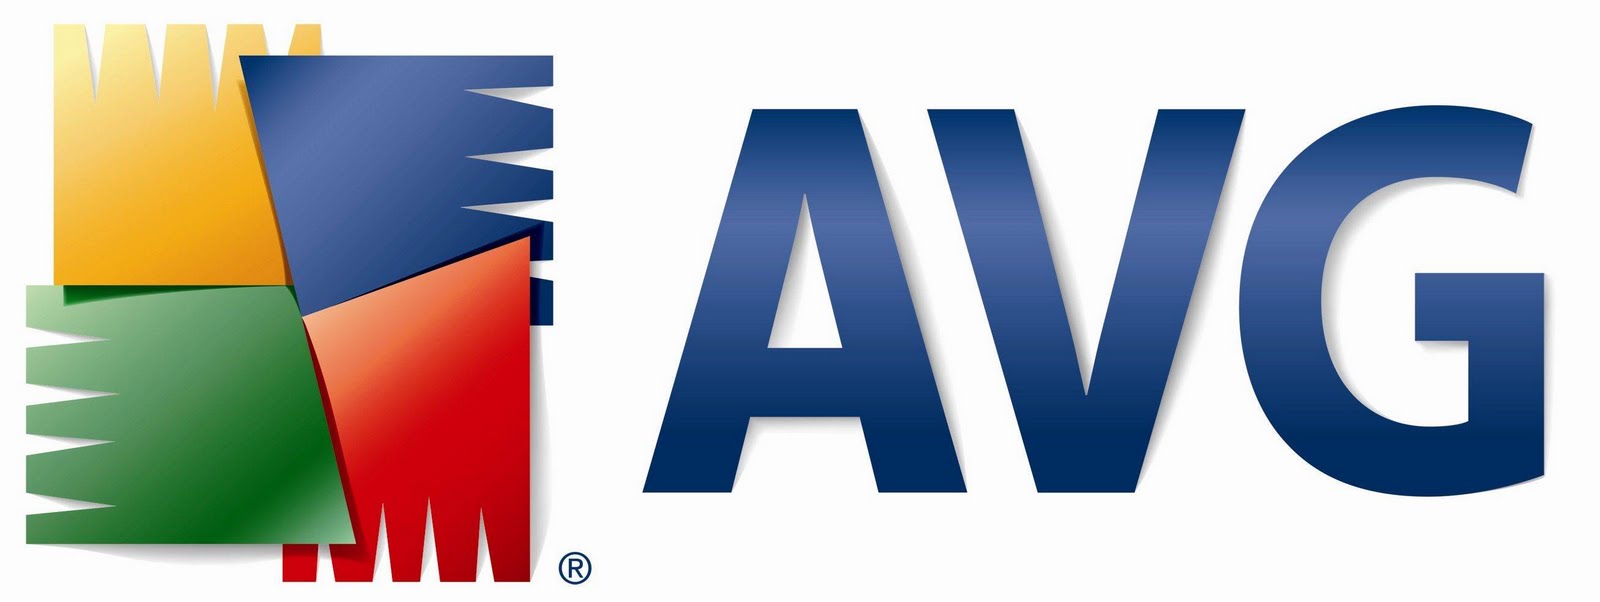 AVG AntiVirus logo